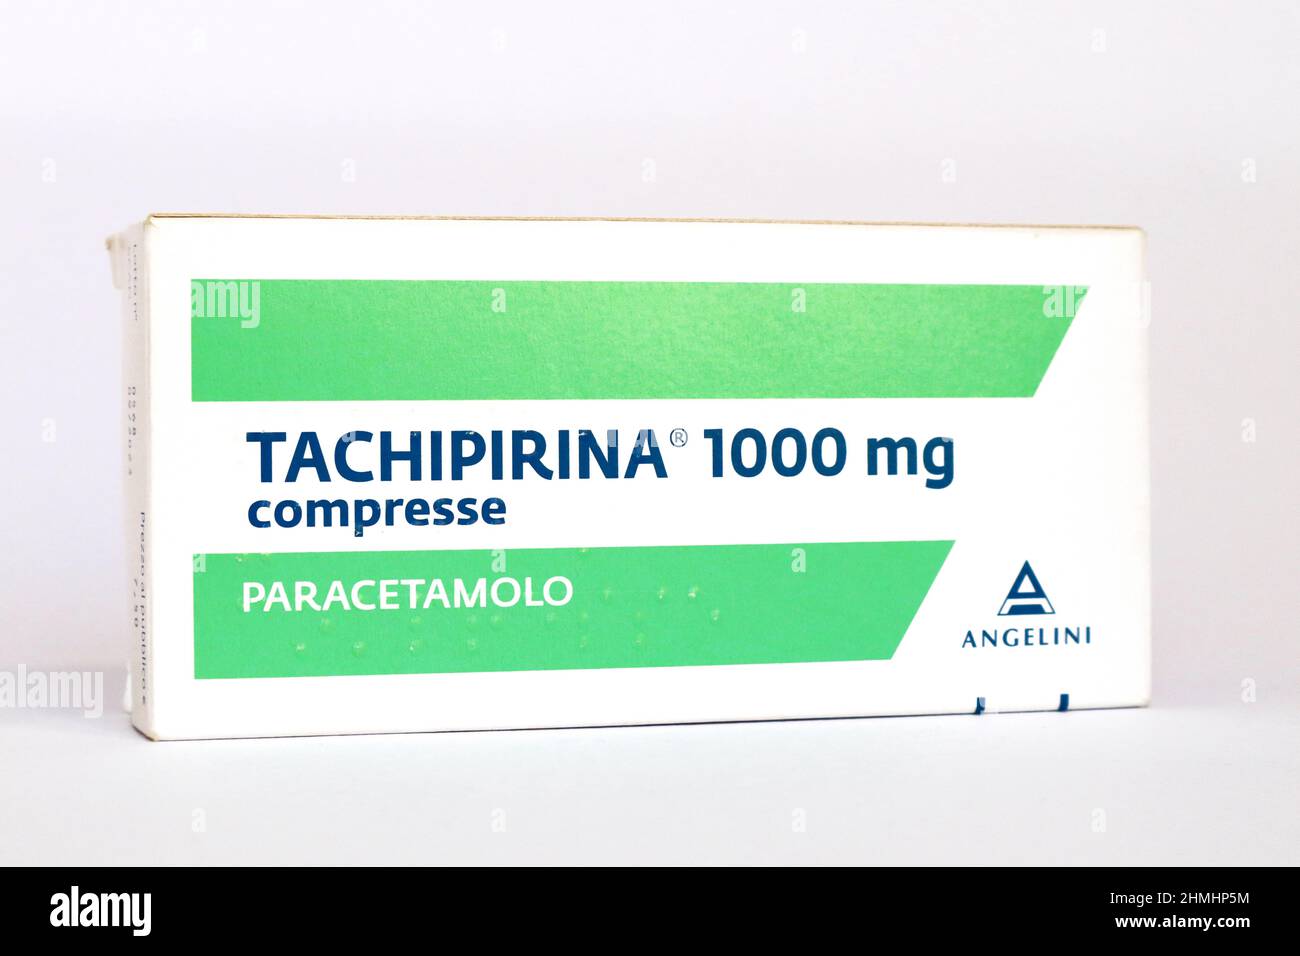 Box of TACHIPIRINA 1000 mg tablets. Tachipirina contains paracetamol,  medication used to treat fever and pain. Manufactured by Angelini Pharma,  Italy Stock Photo - Alamy